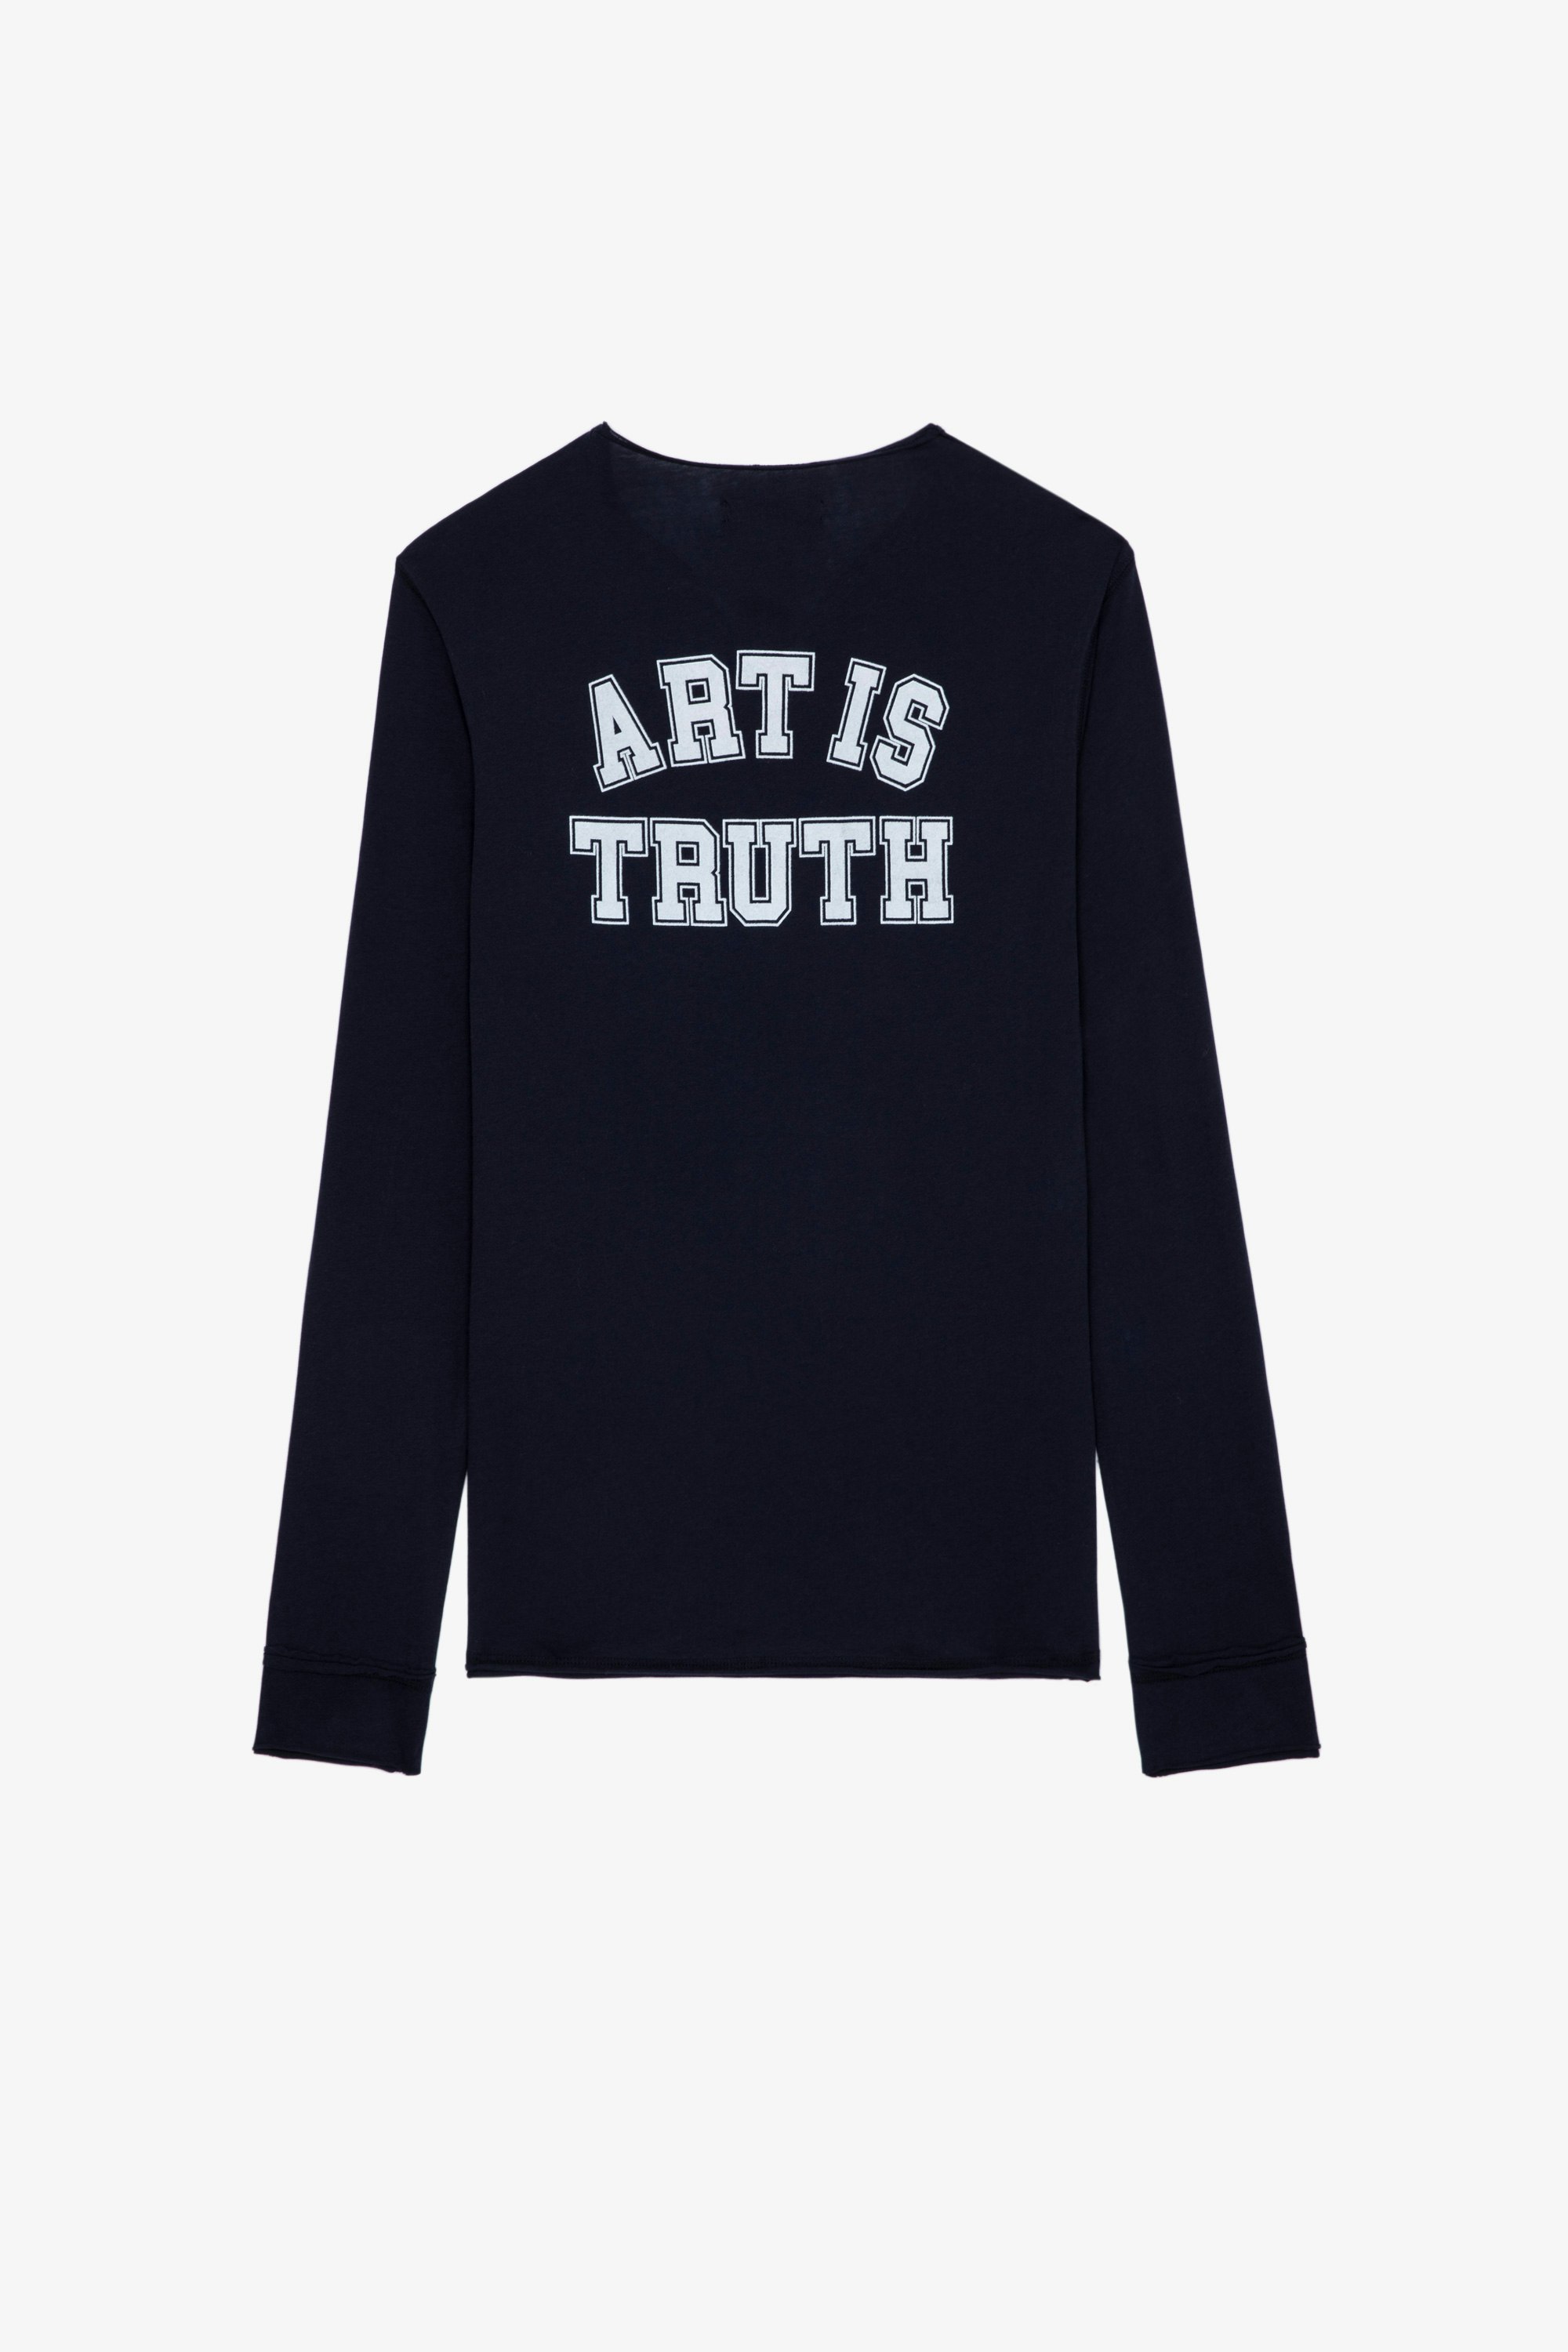 College Monastir T-shirt Men’s navy blue Henley collar T-shirt with ‘Art is truth’ print on back